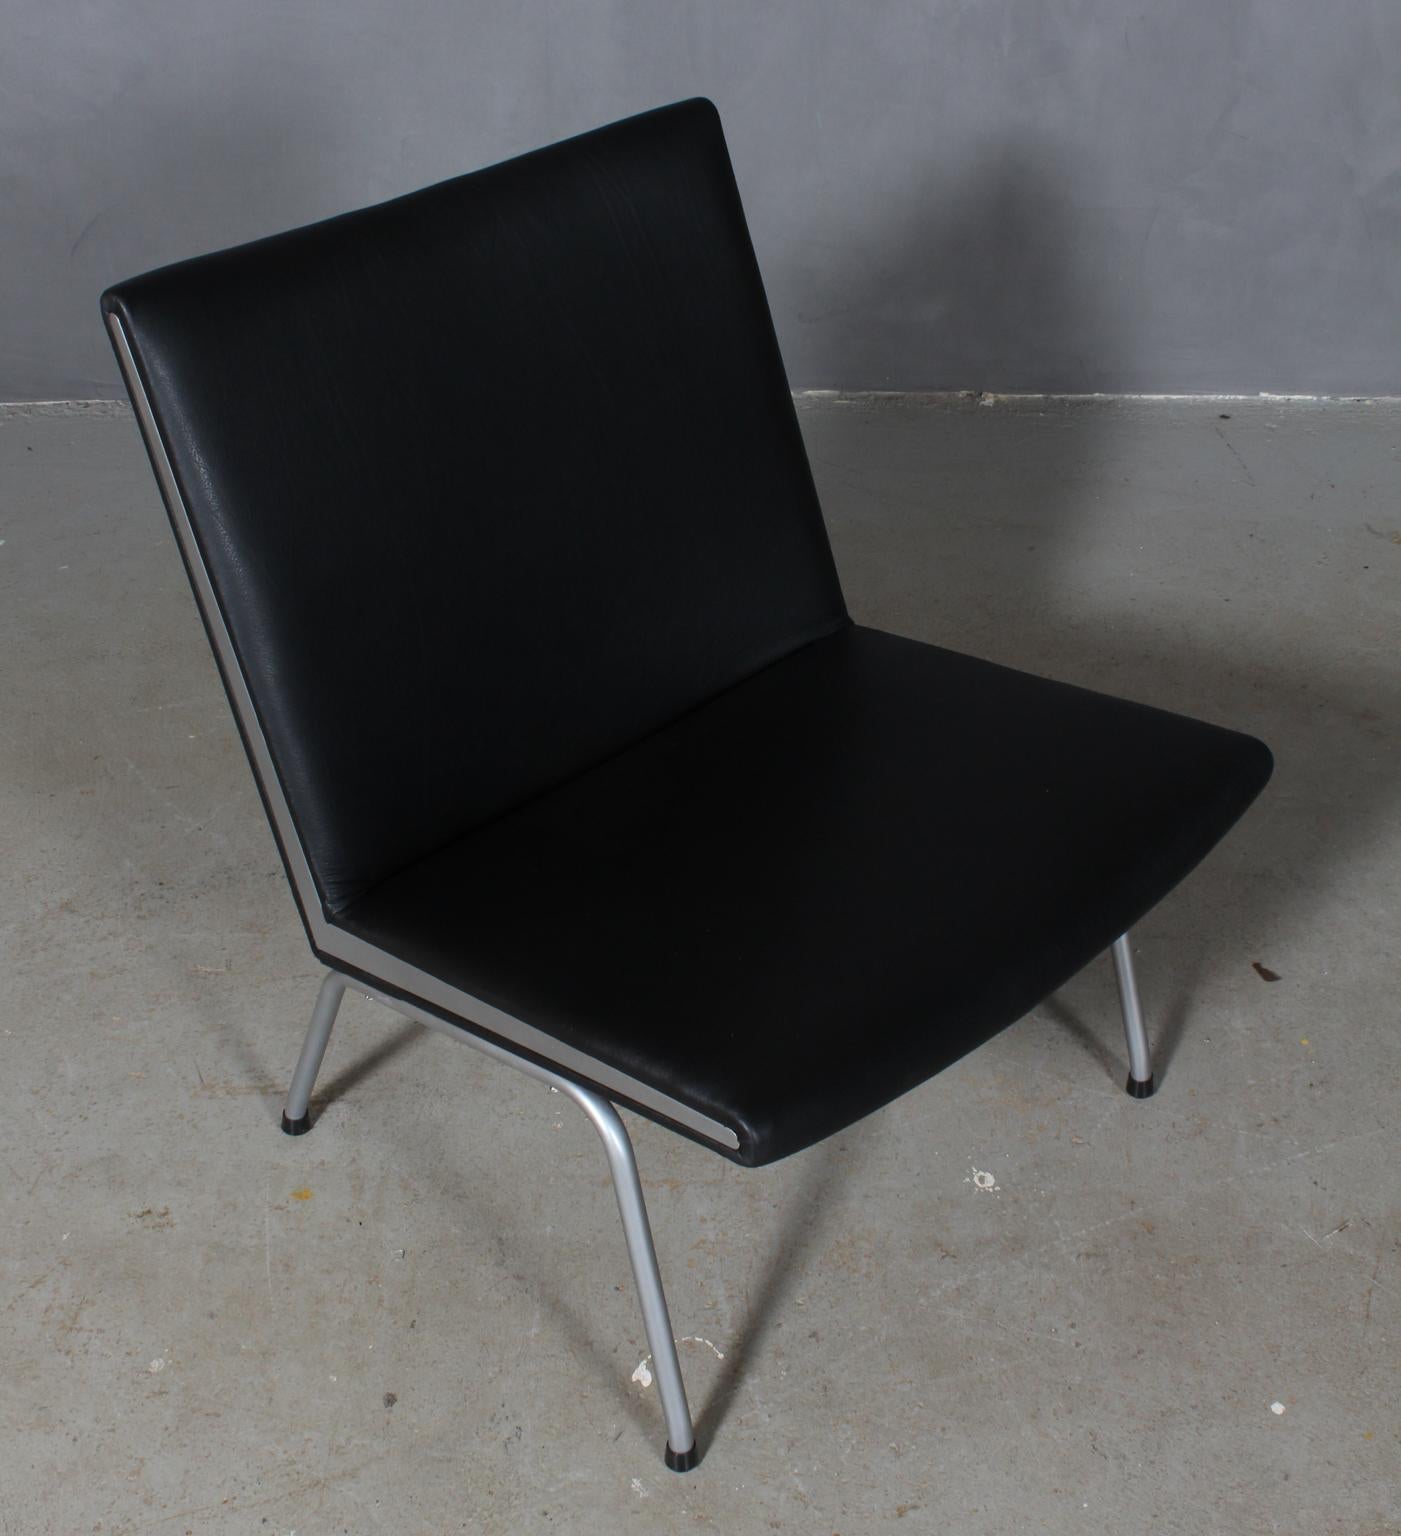 Hans J. Wegner lufthavnsttole designed for Kastrup Airport. New upholstered with black aniline leather.

Base and sides in steel.

Model AP40, made by AP stolen.